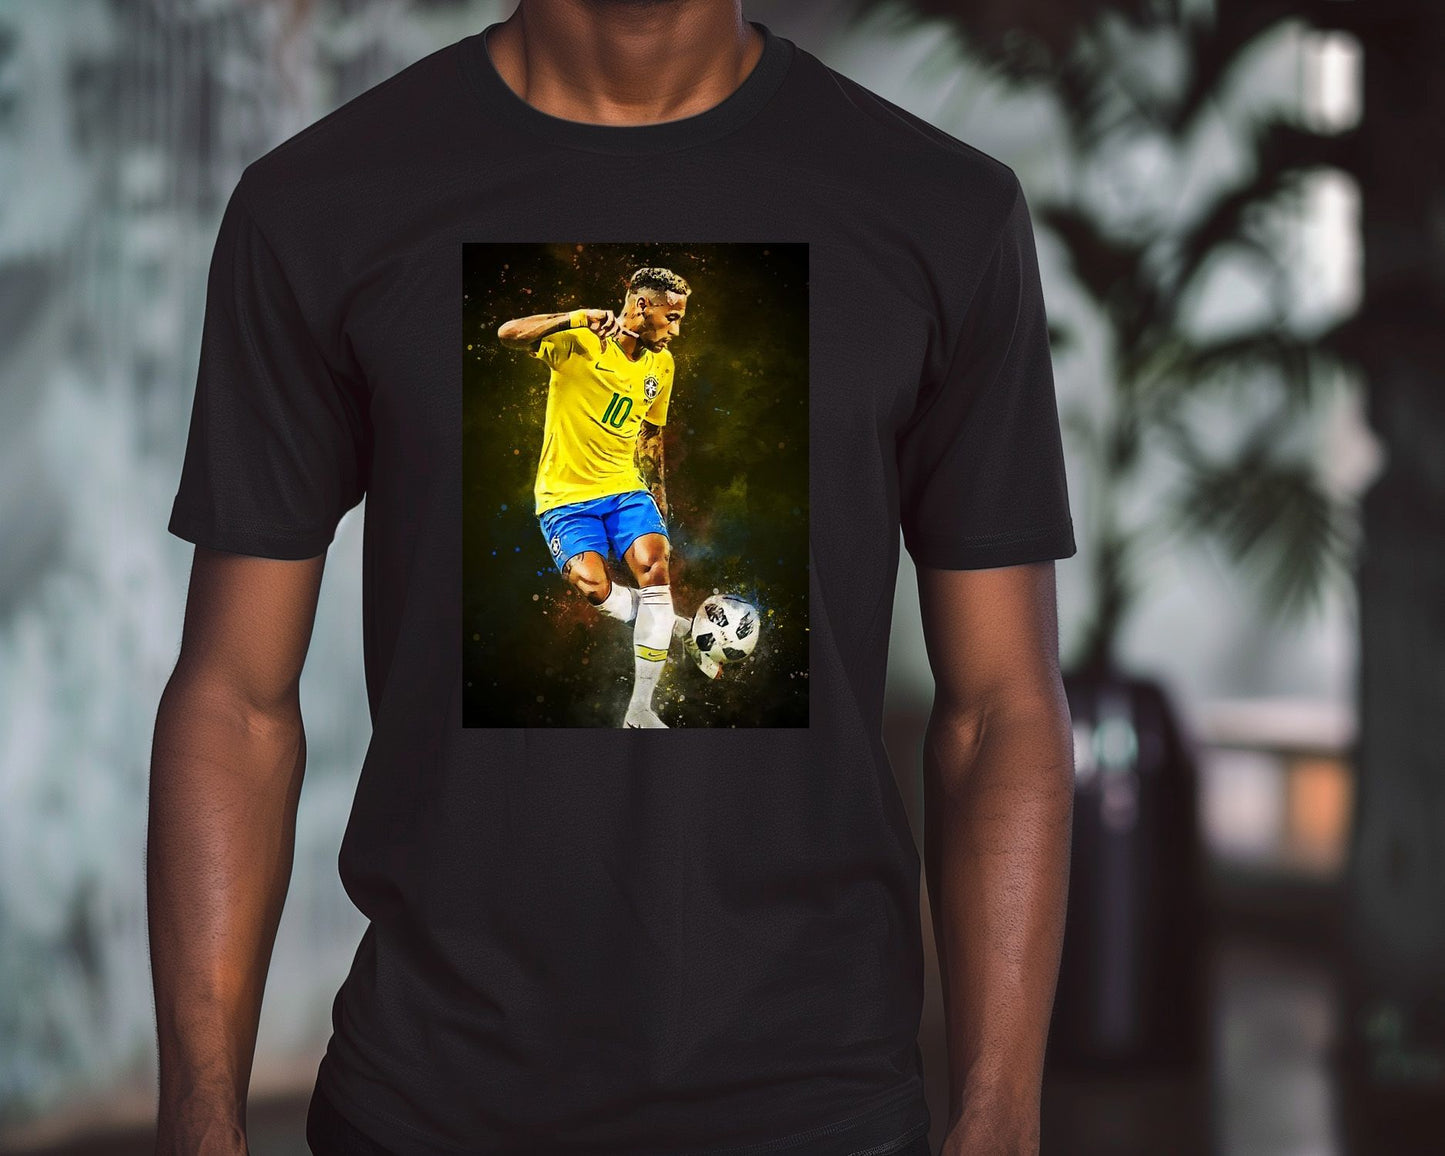 Splatter by Neymar - @4147_design